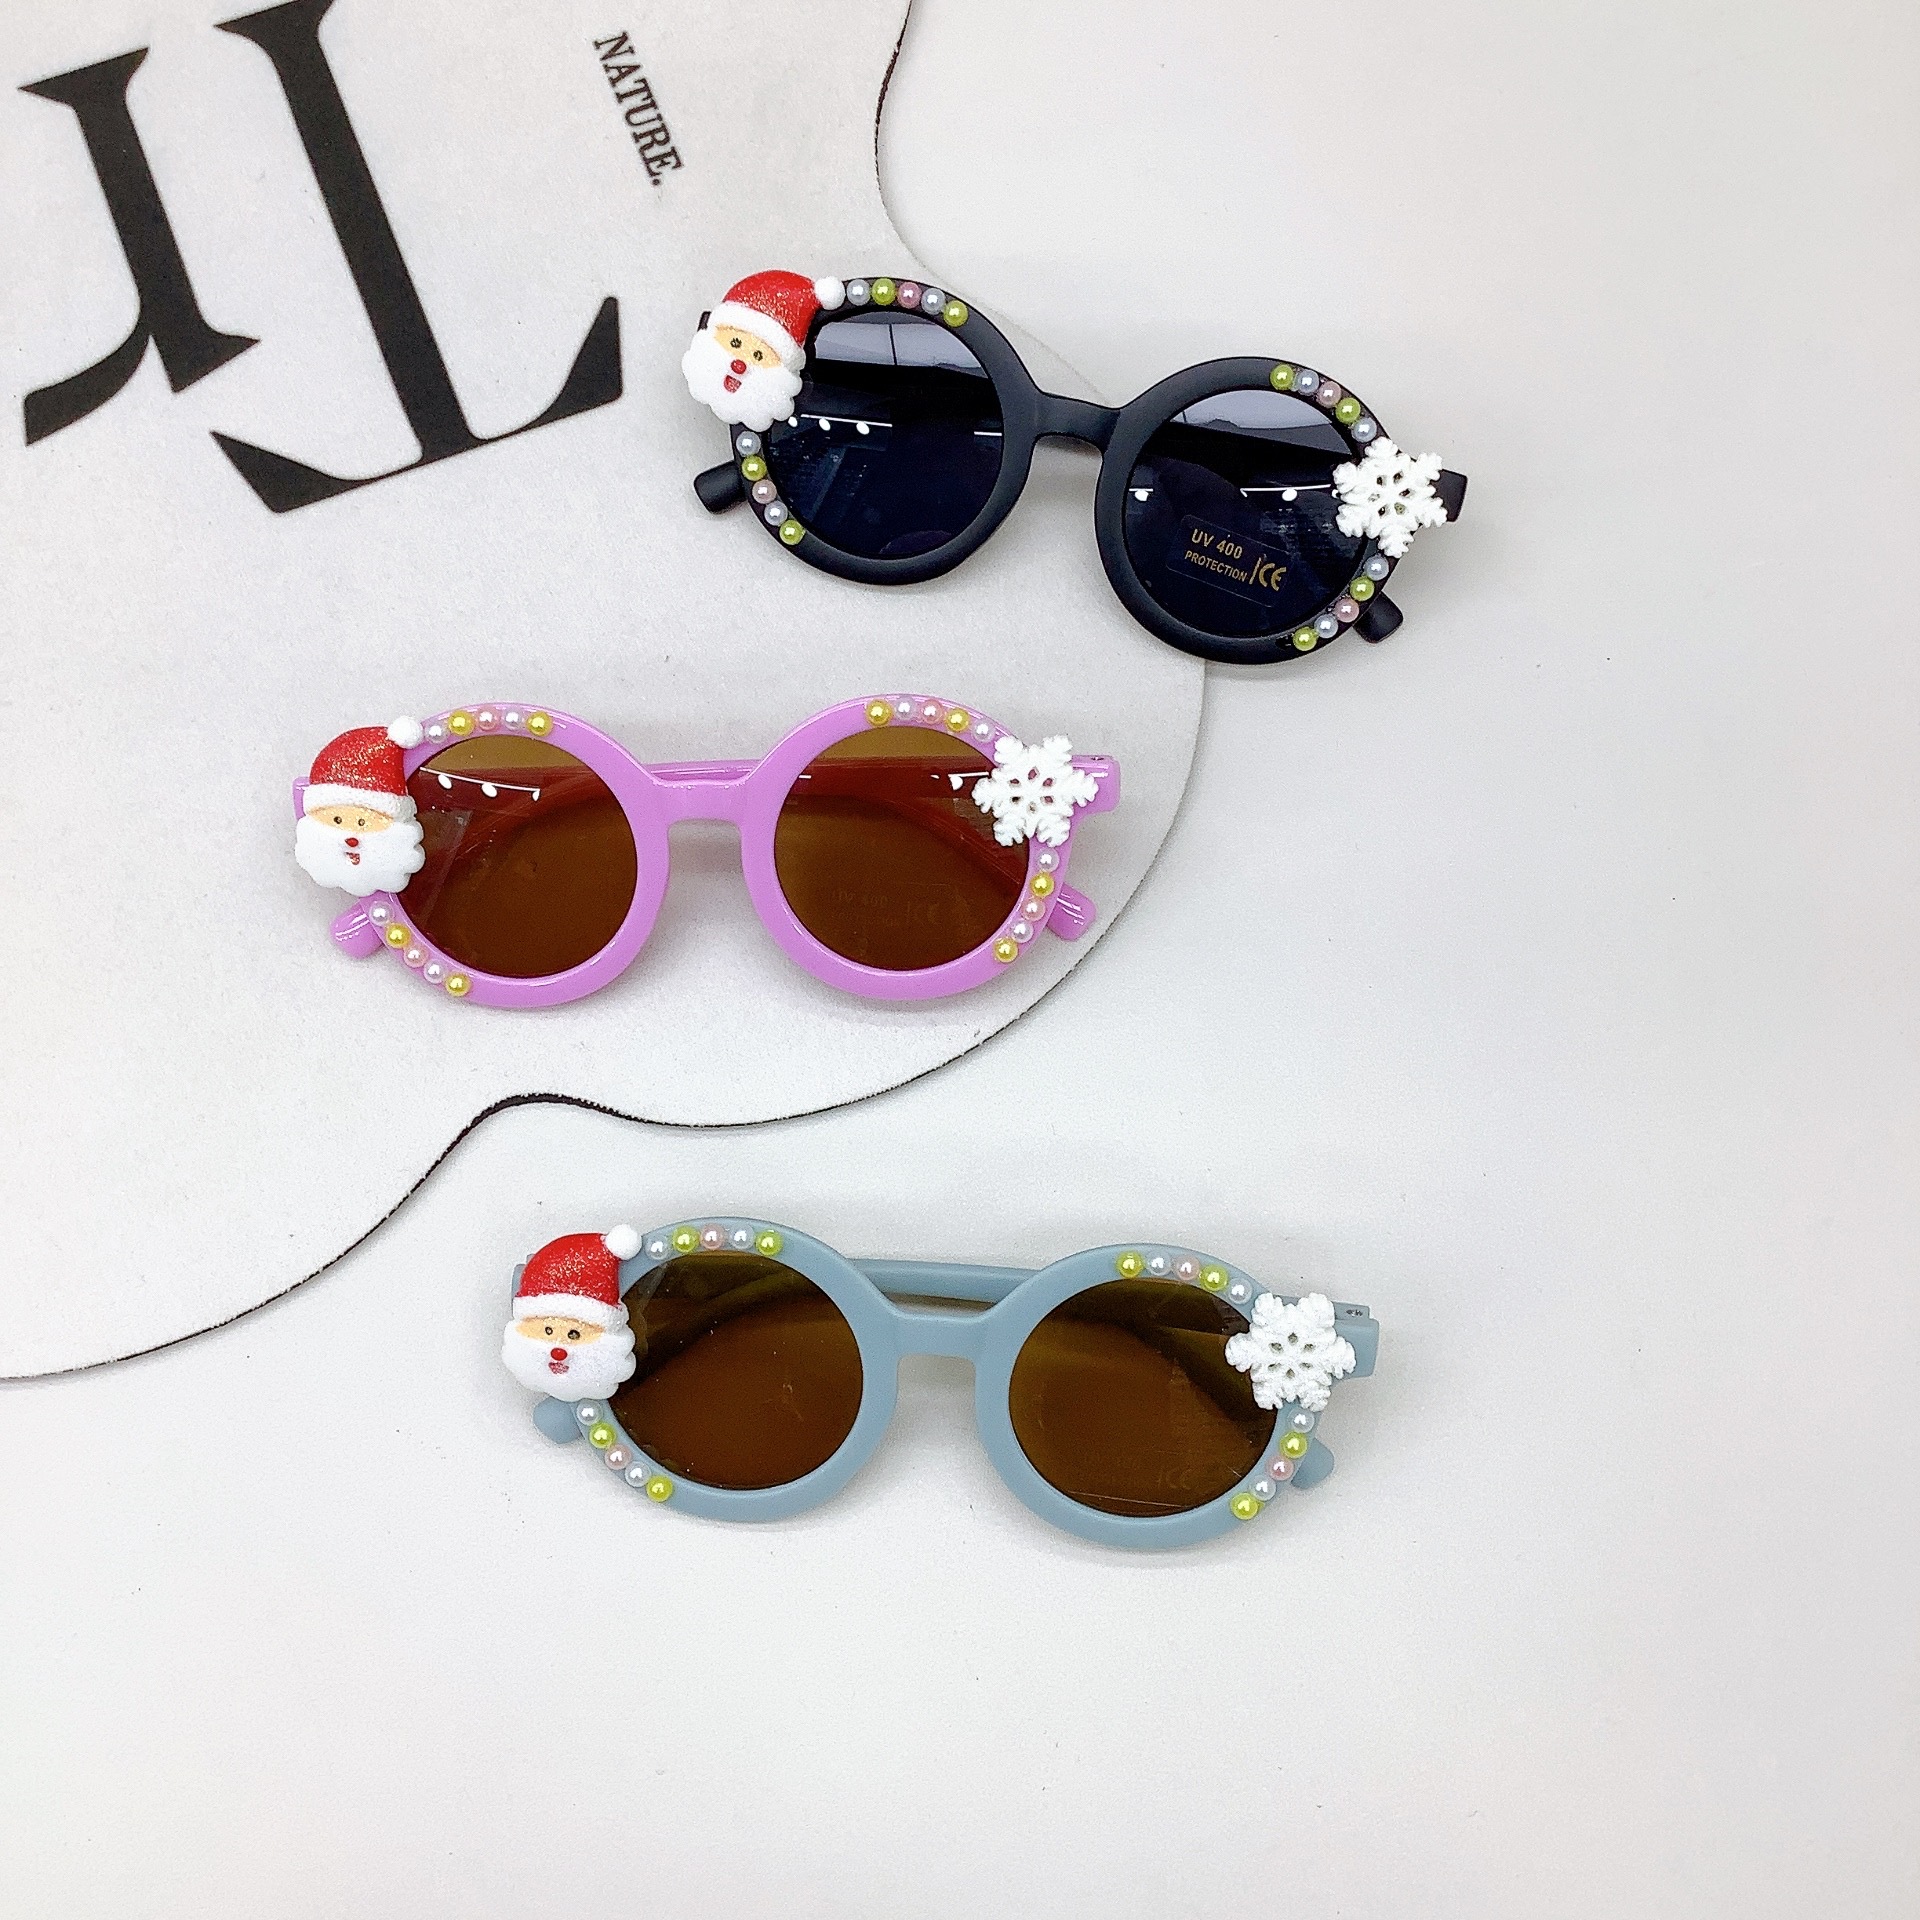 New Cute Kids Sunglasses round Frame Fashion Snowflake Santa Claus Baby Sunglasses Sunshade Stylish Glasses